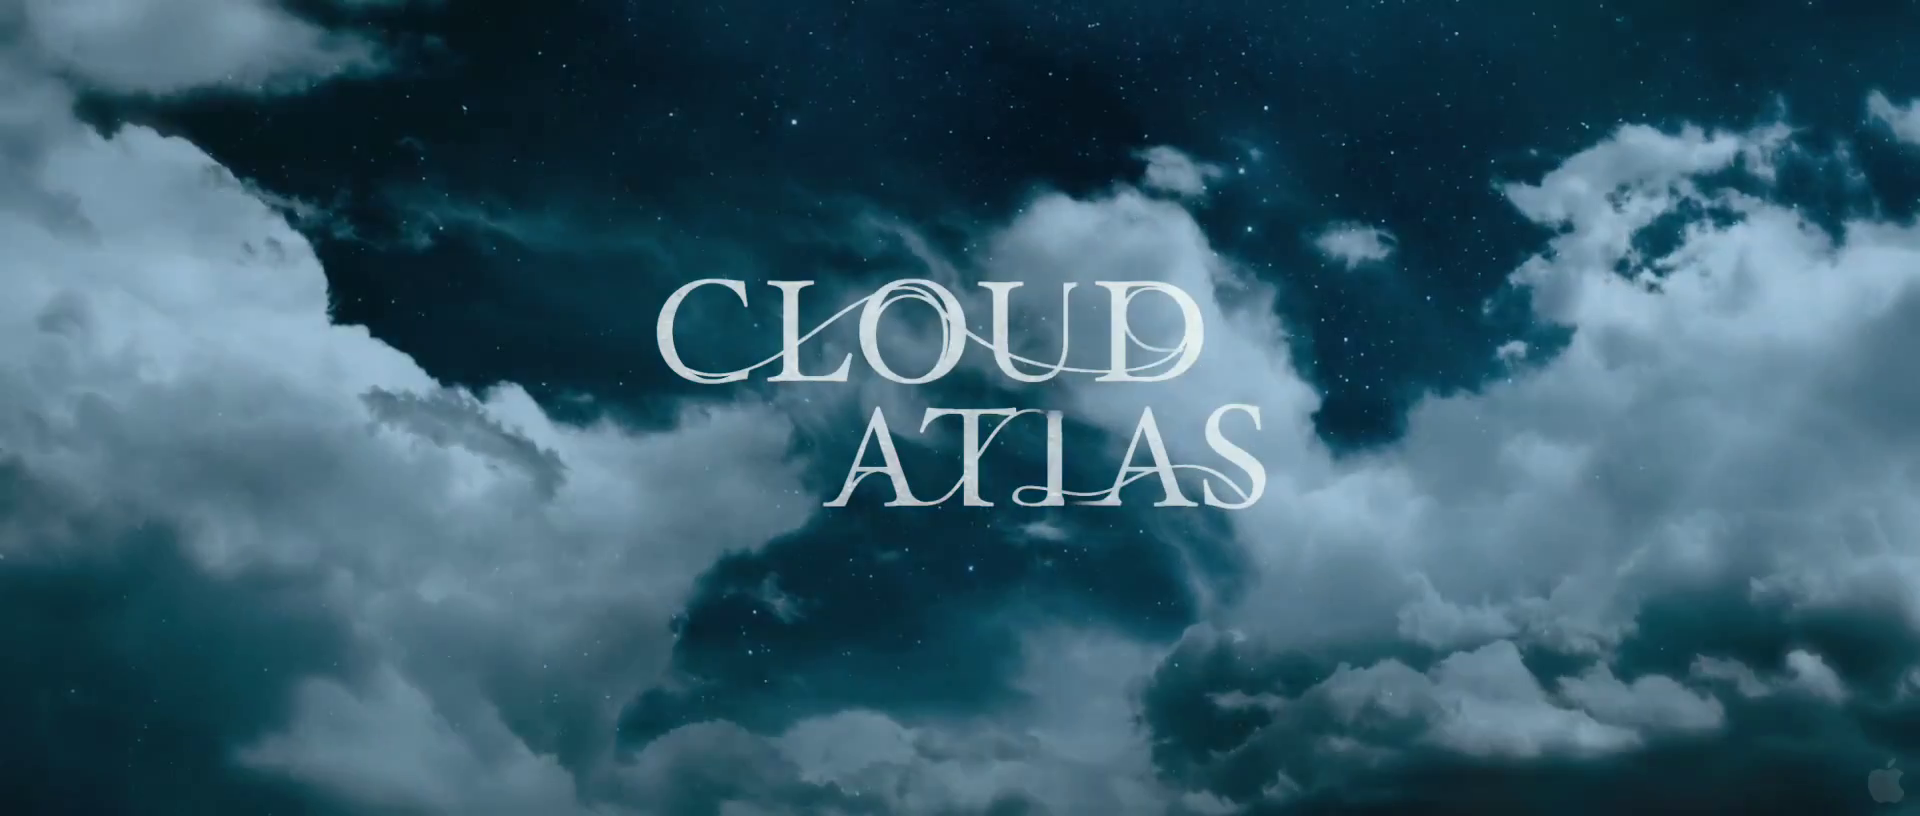 Cloud Atlas (film).png